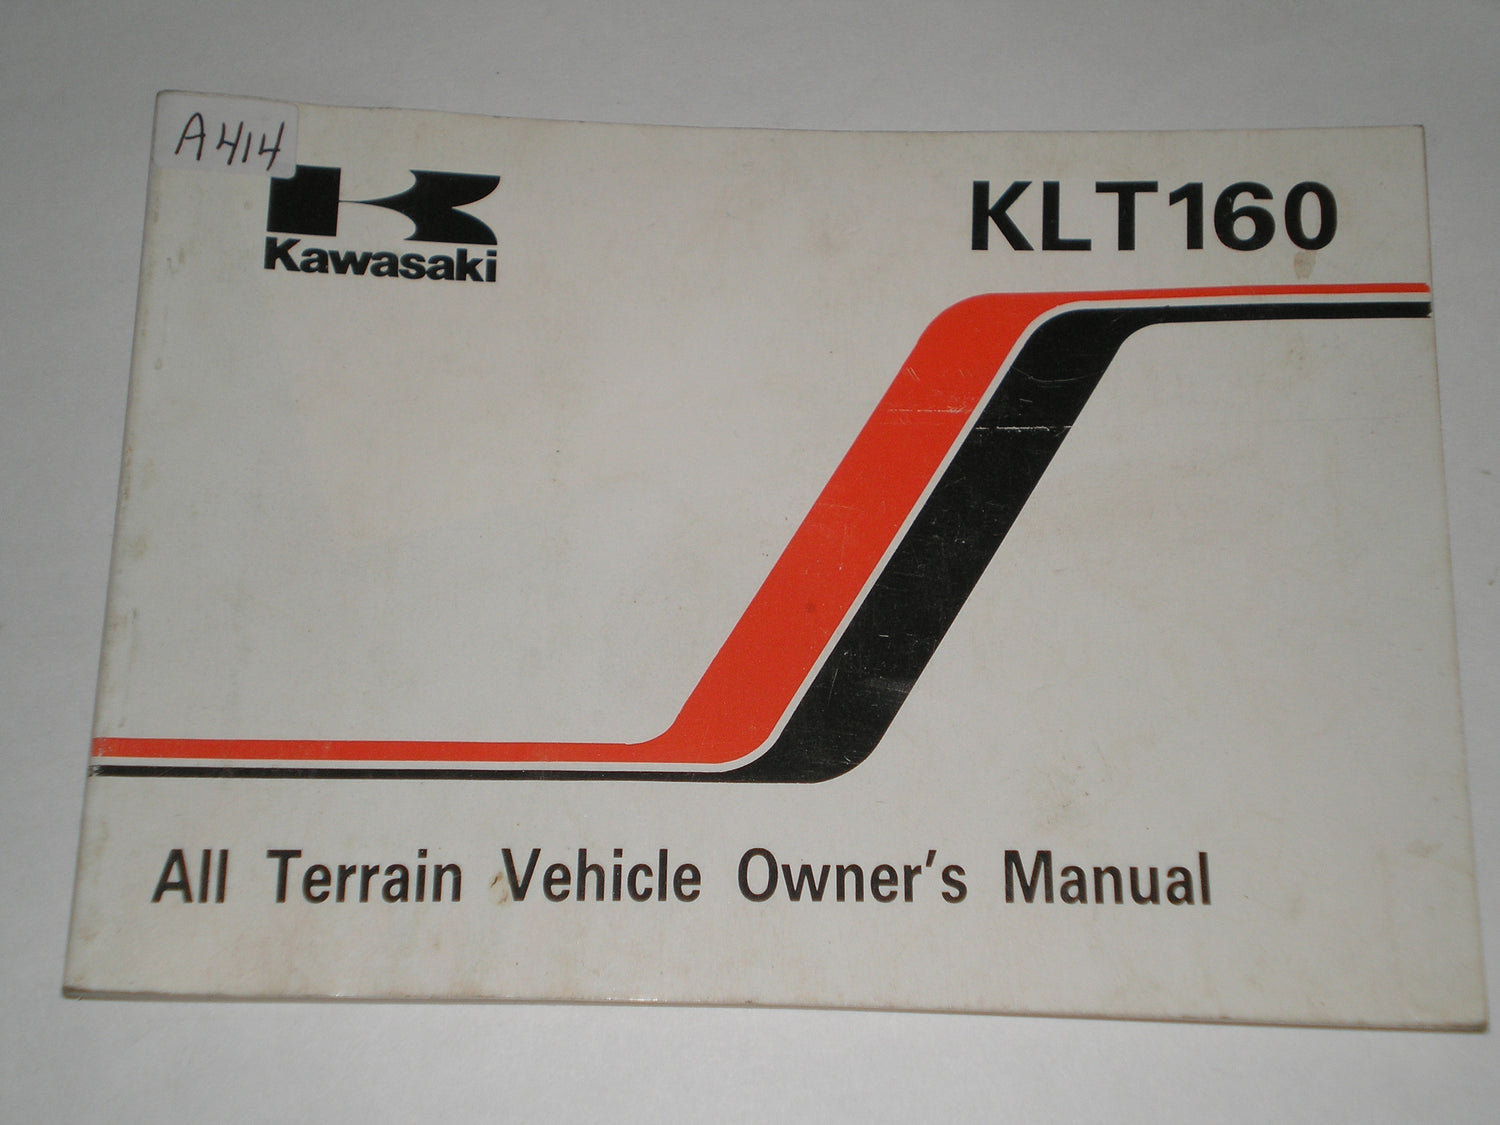 Kawasaki Owners Manual